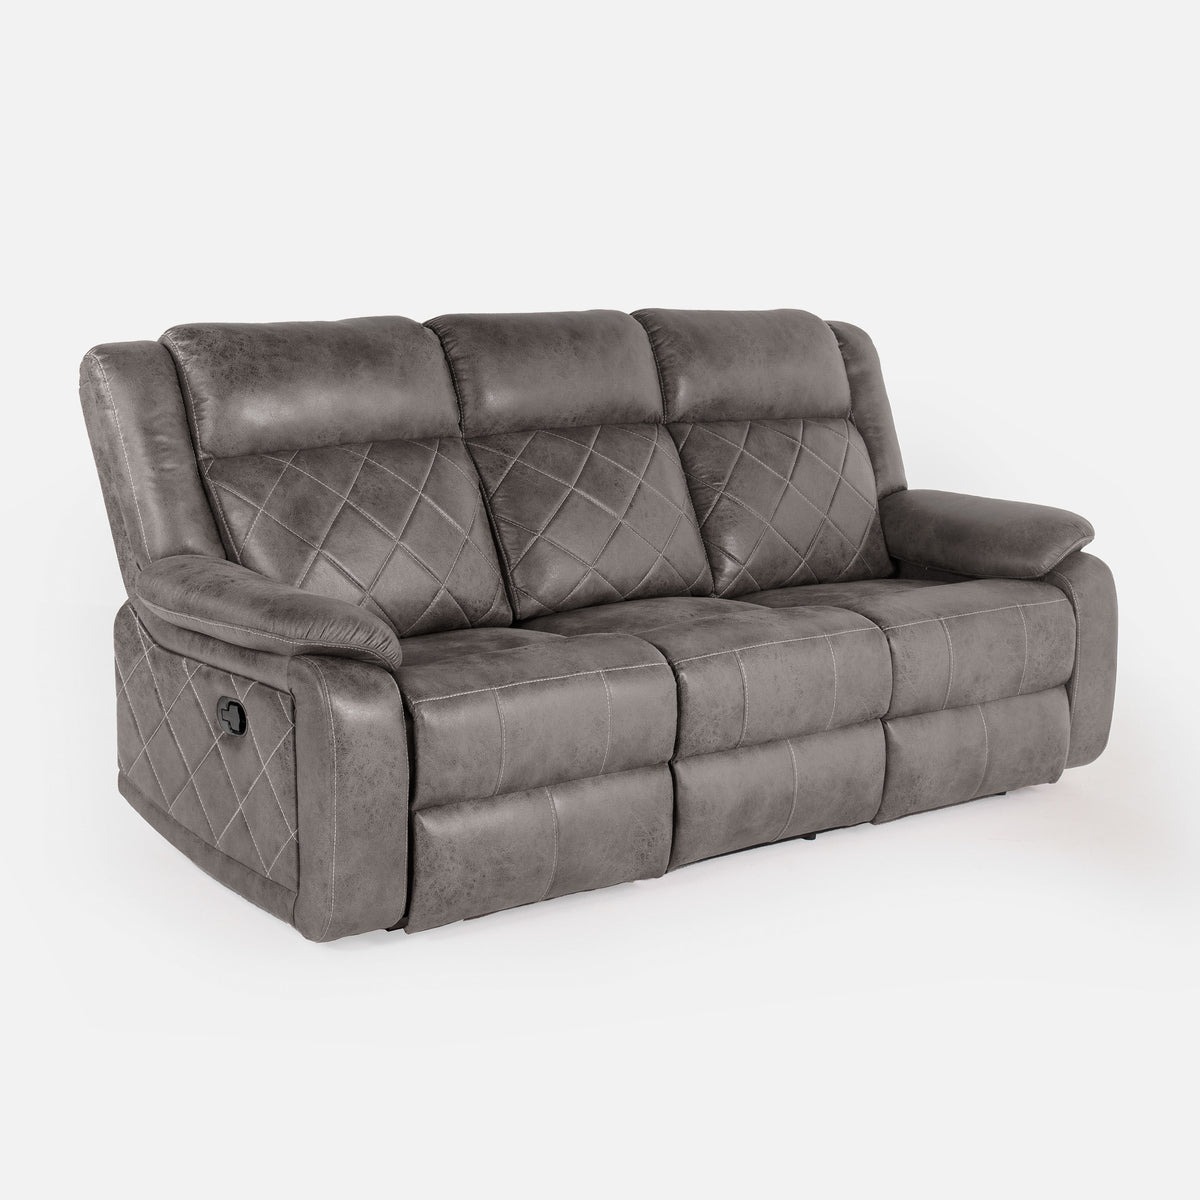 Werfo Marvel 3 Seater Recliner Sofa Grey